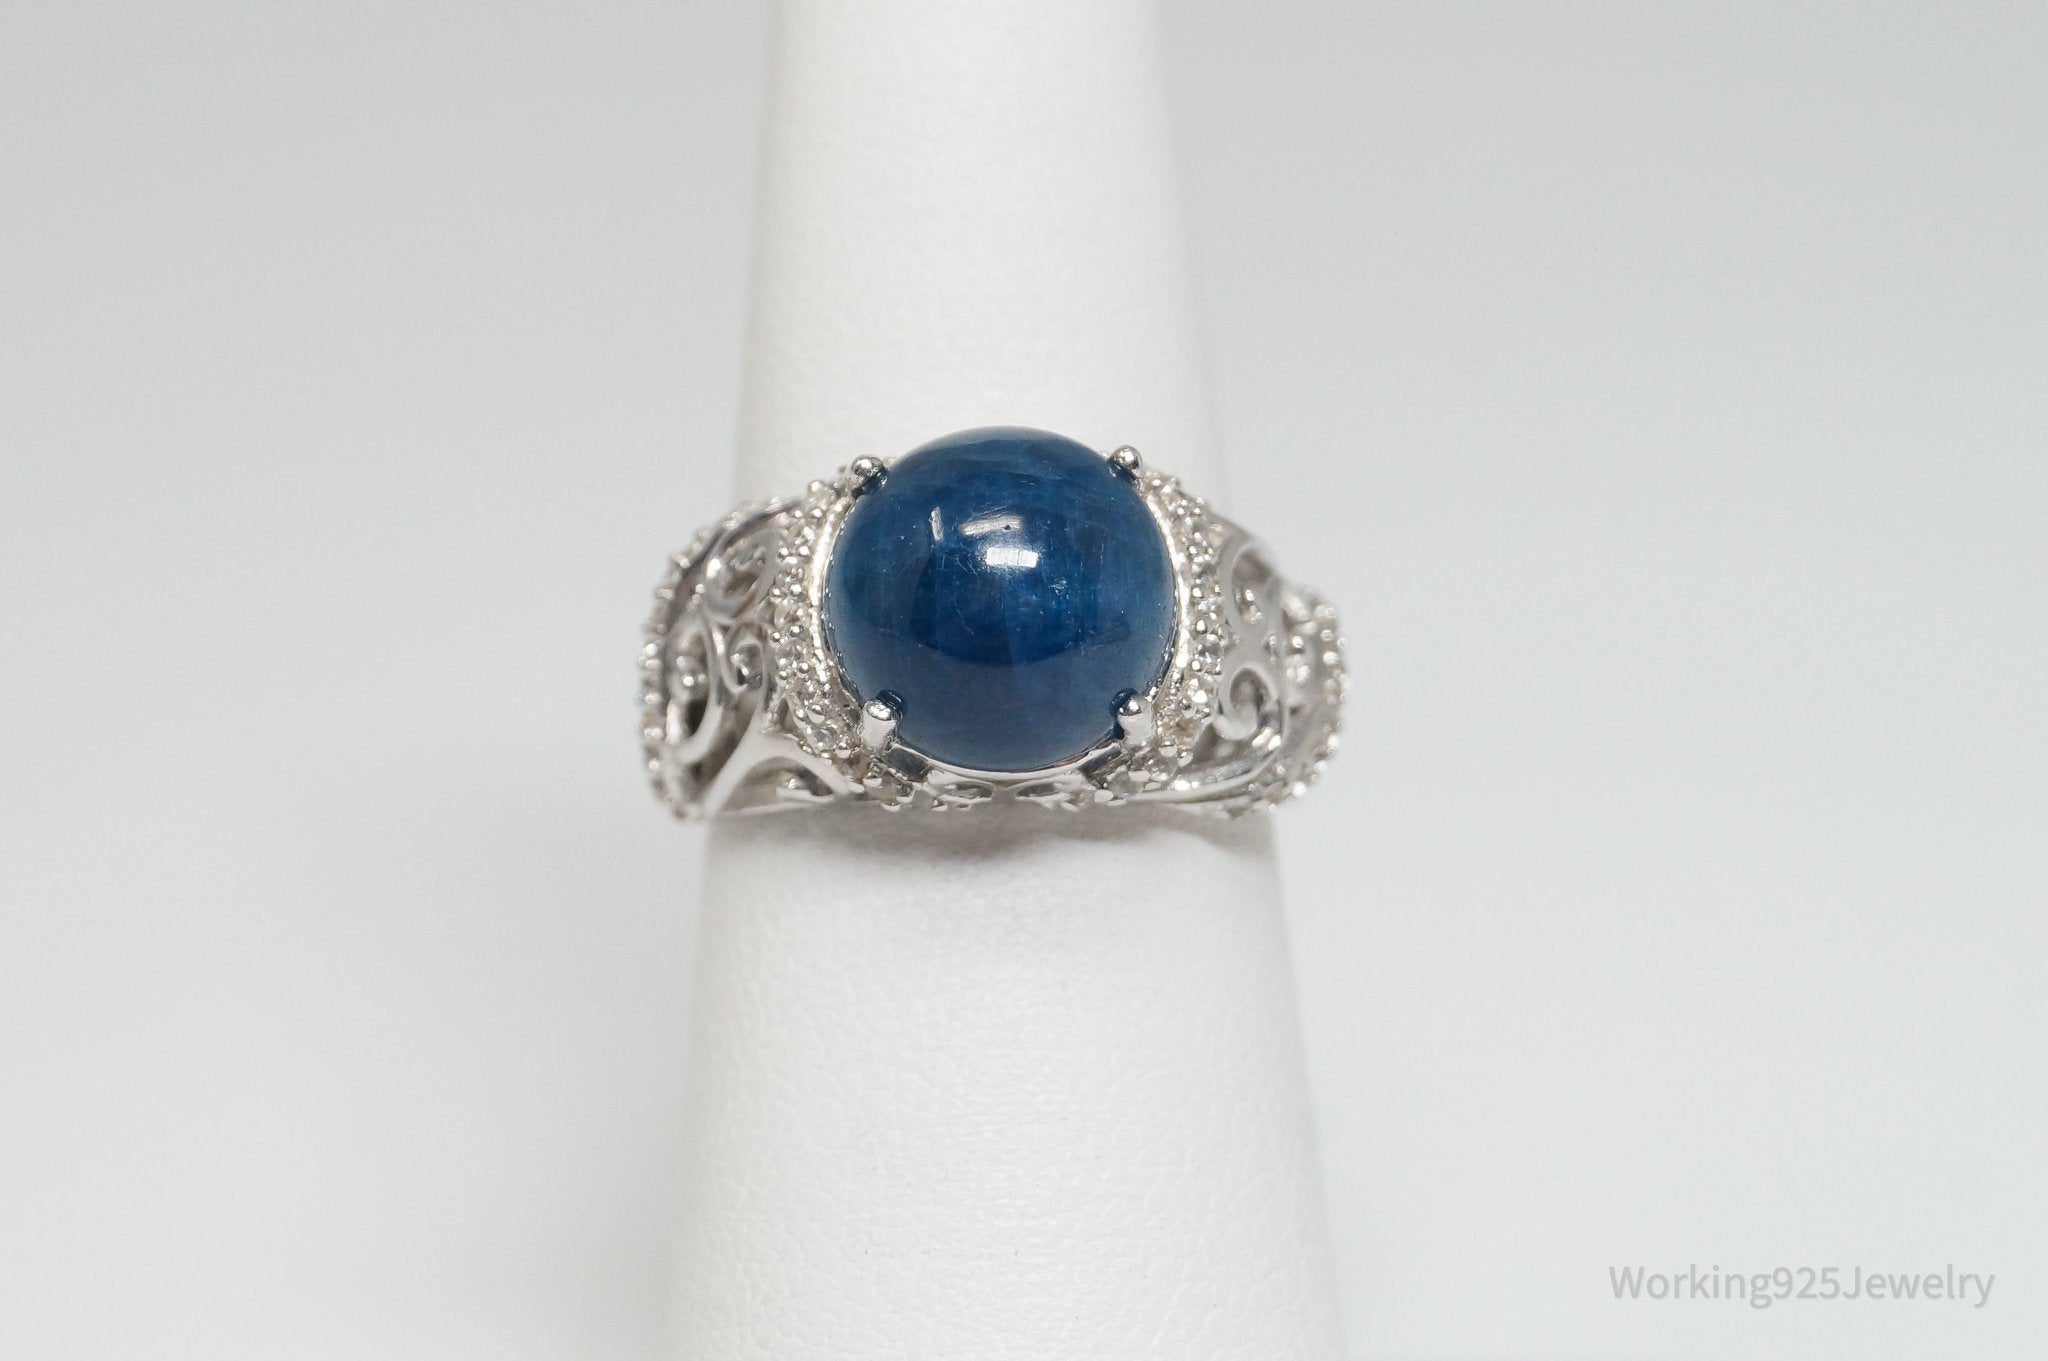 Vintage Designer Art Deco Style Sapphire CZ Sterling Silver Ring - Size 6